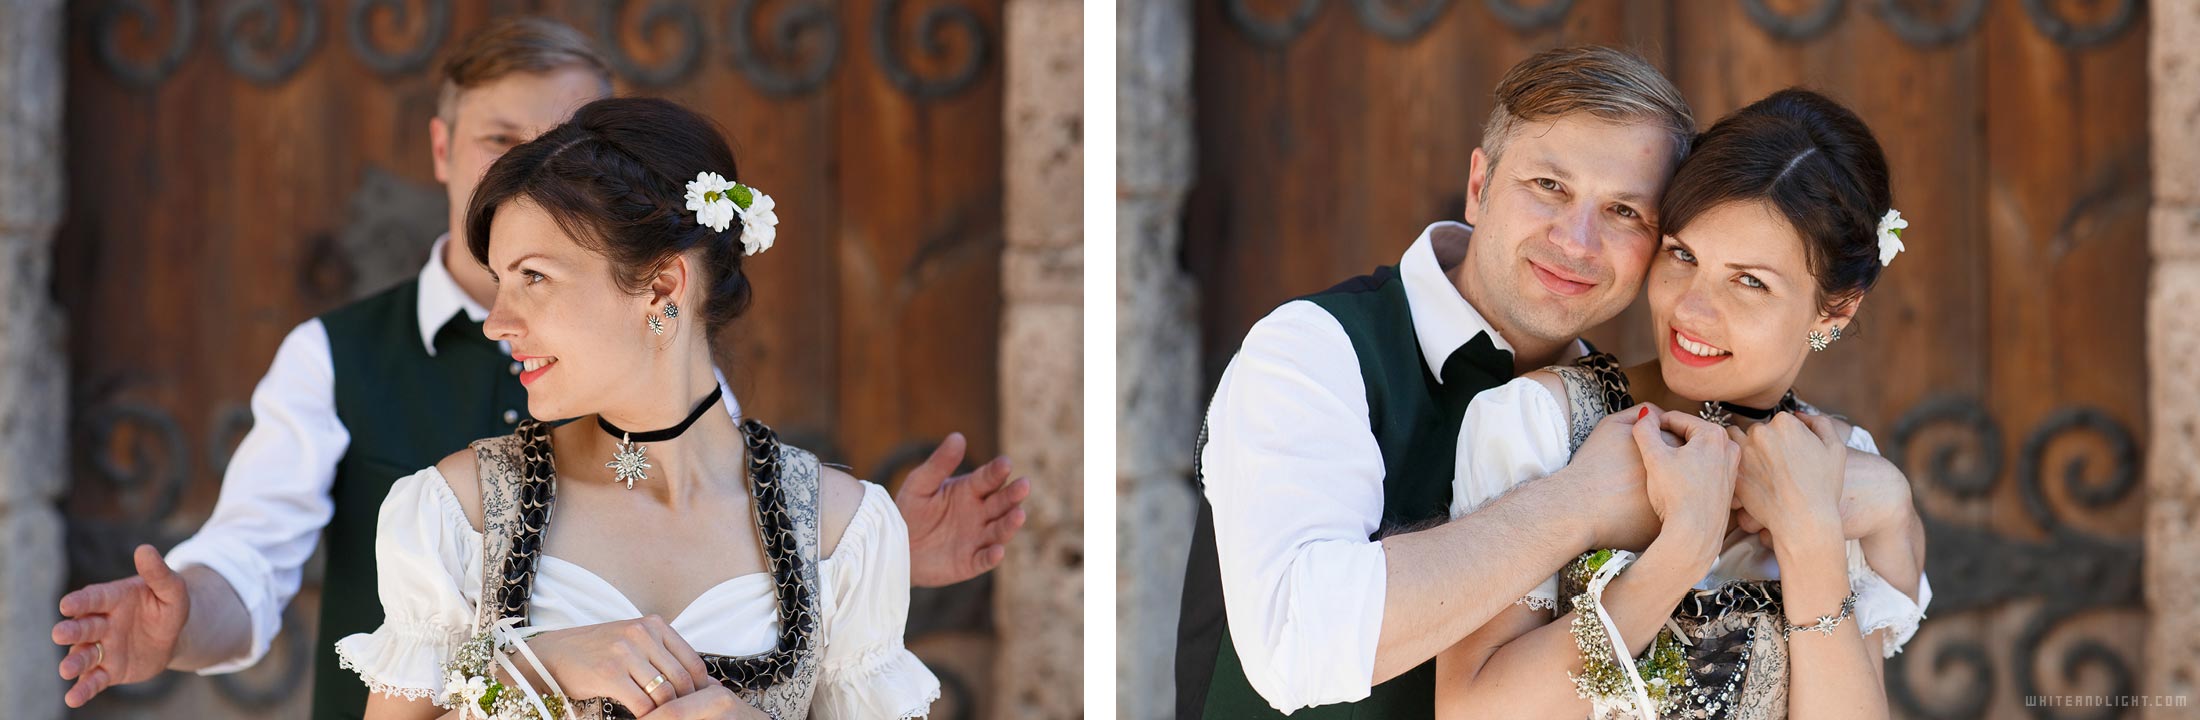 Bavarian wedding dress - wedding photographer packages